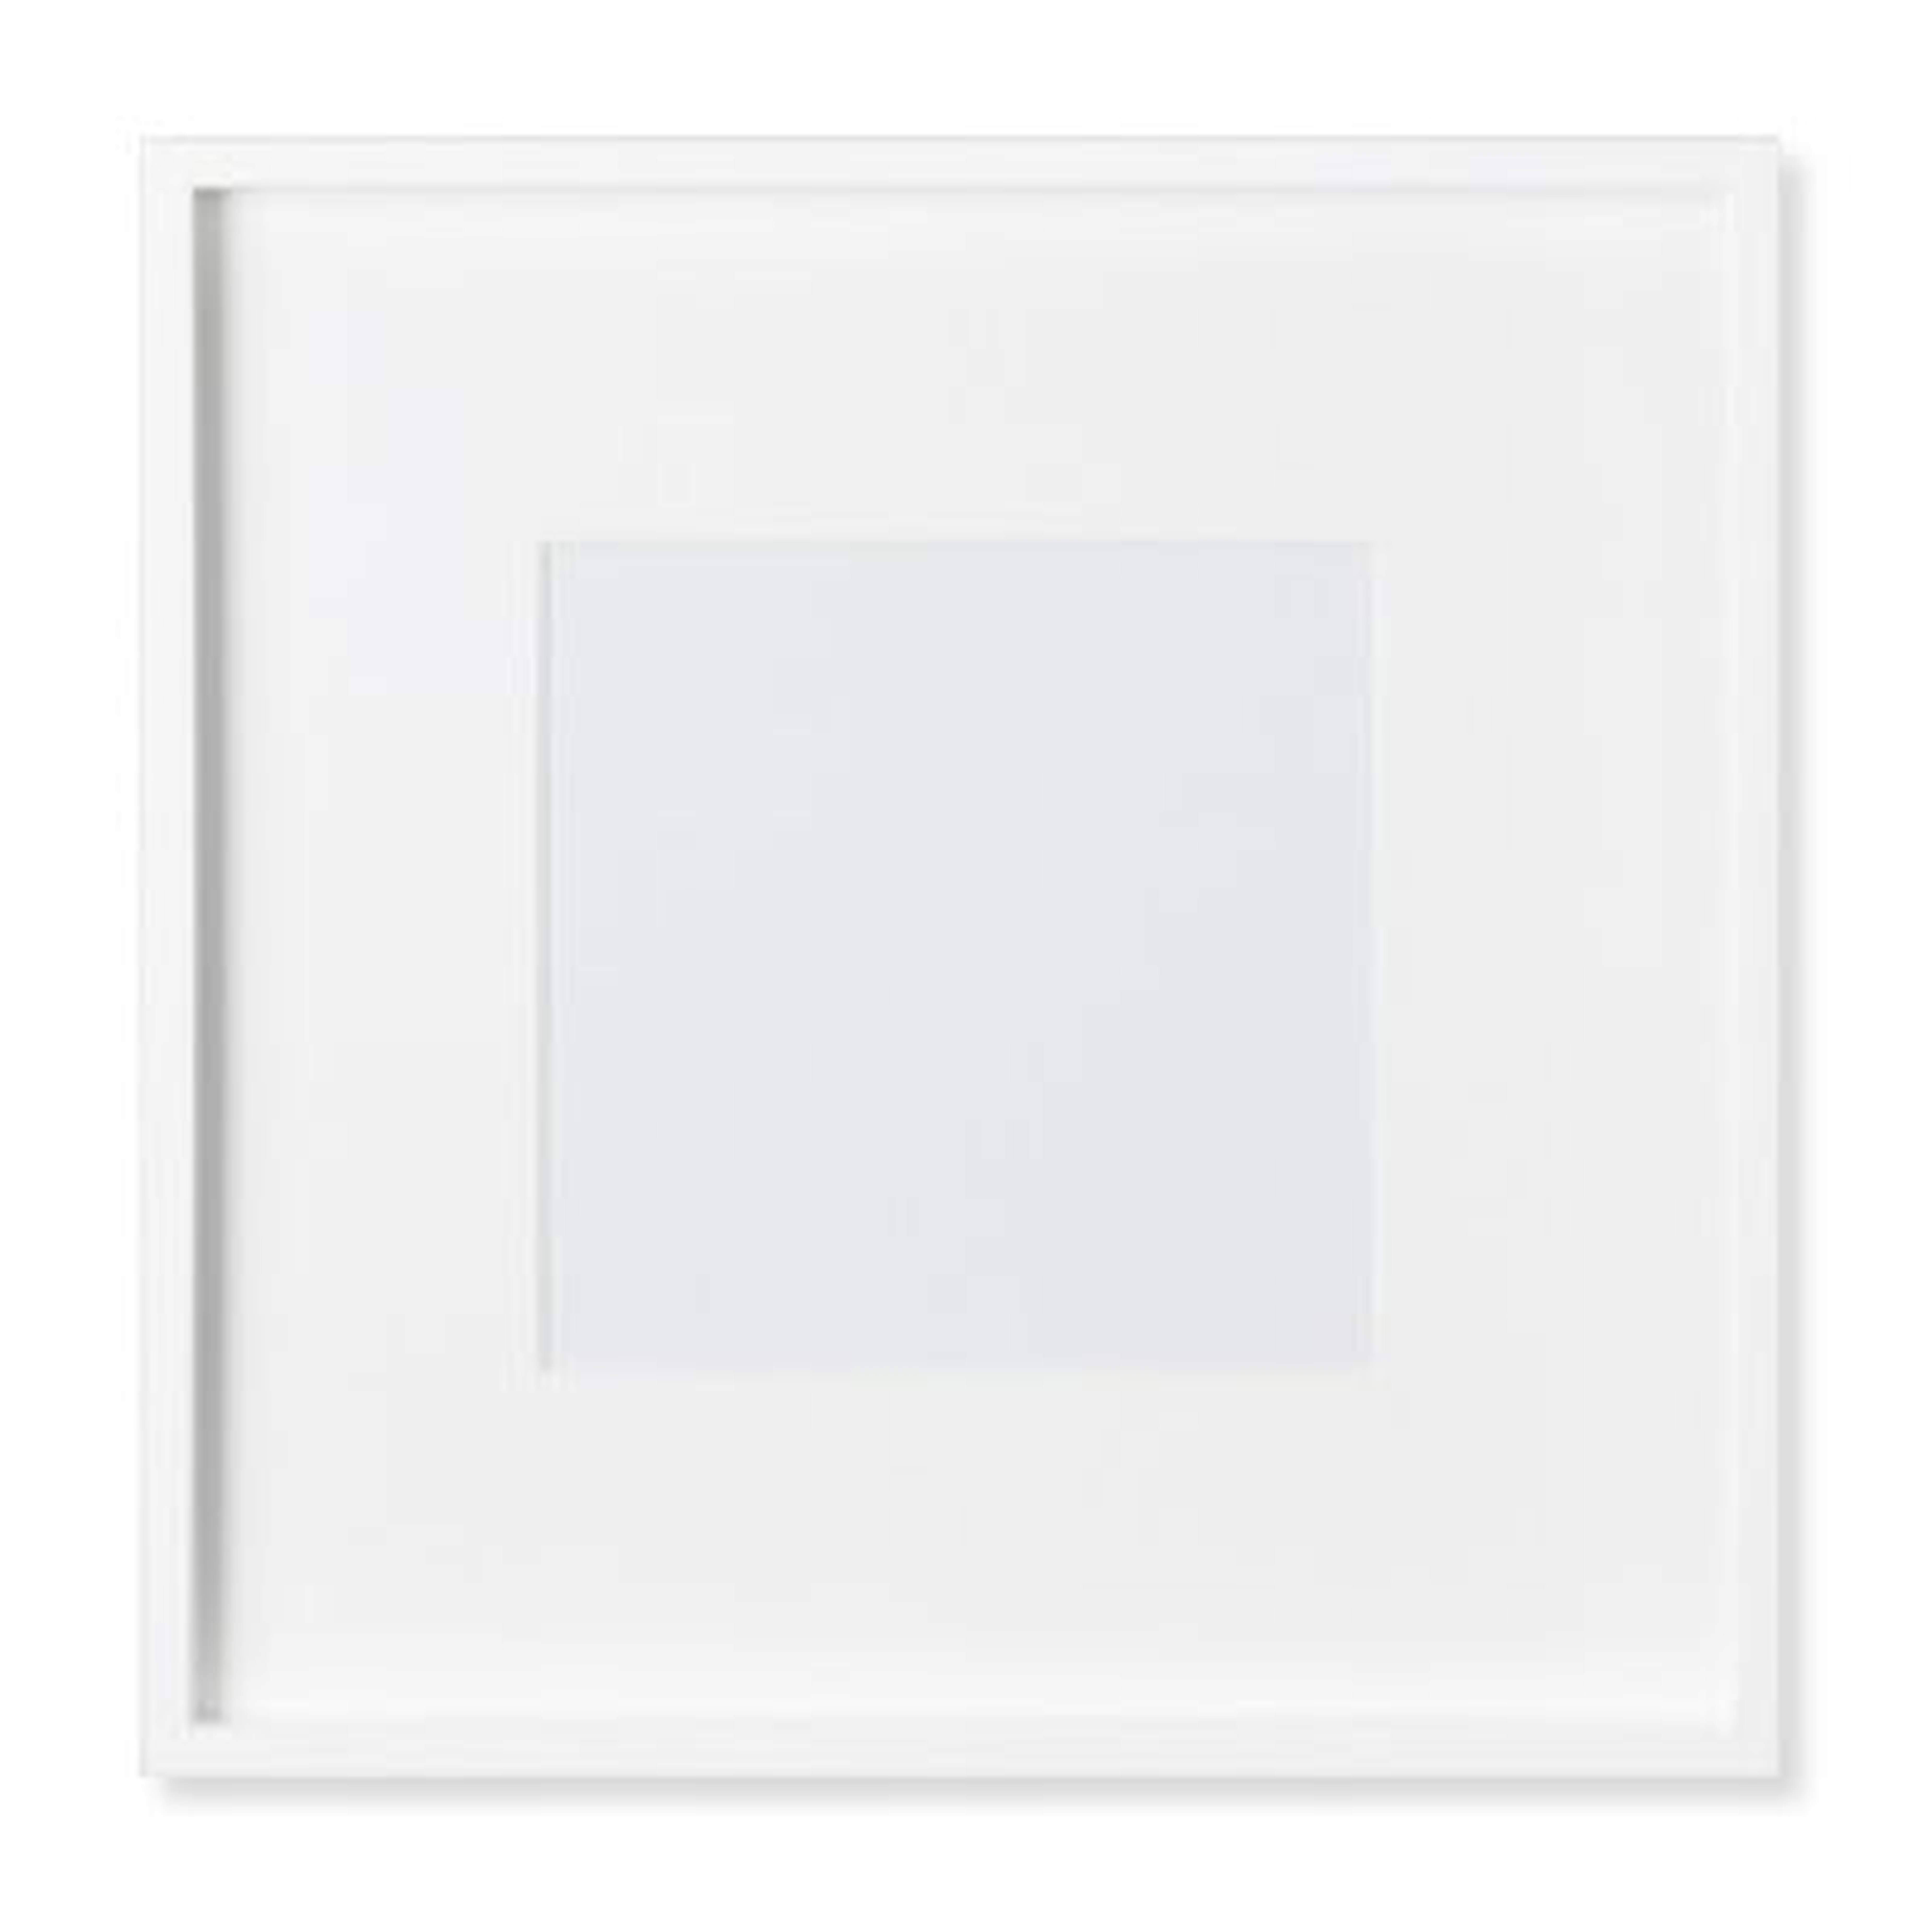 White Lacquer Gallery Picture Frame, 8" X 8" - Williams Sonoma